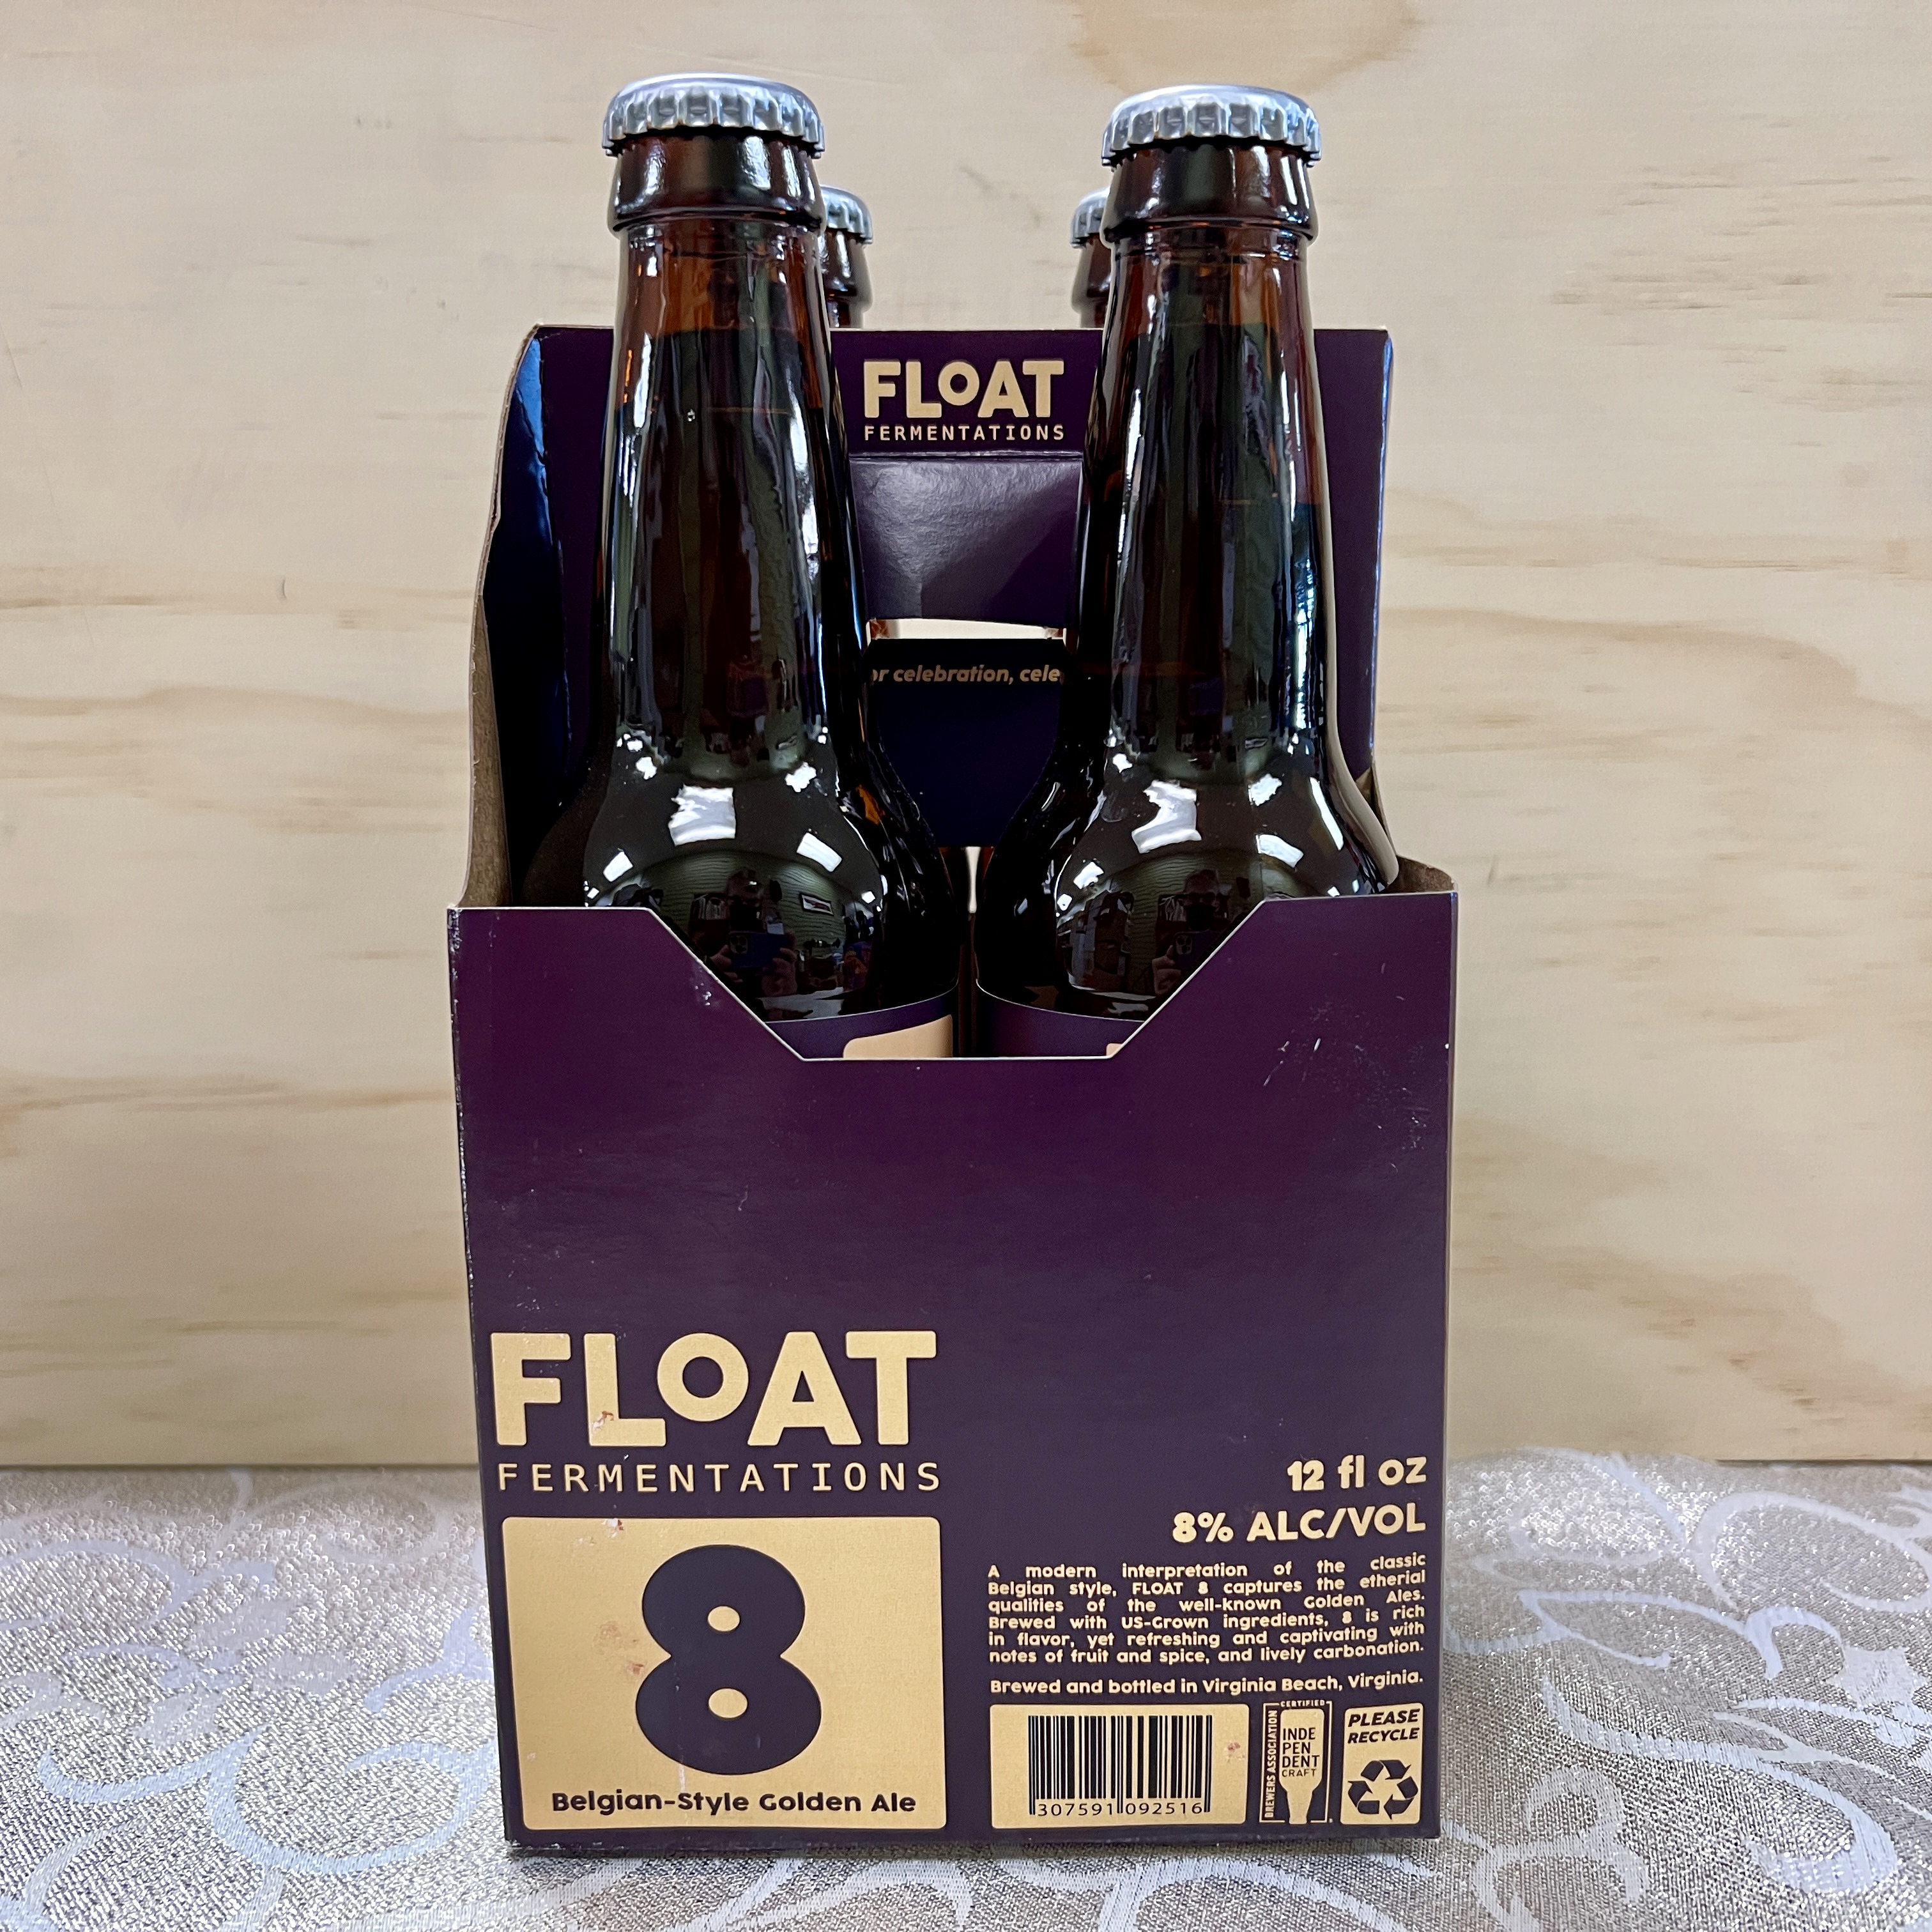 Float Fermentations 8 Belgian-style Golden Ale 4 x 12oz bottles